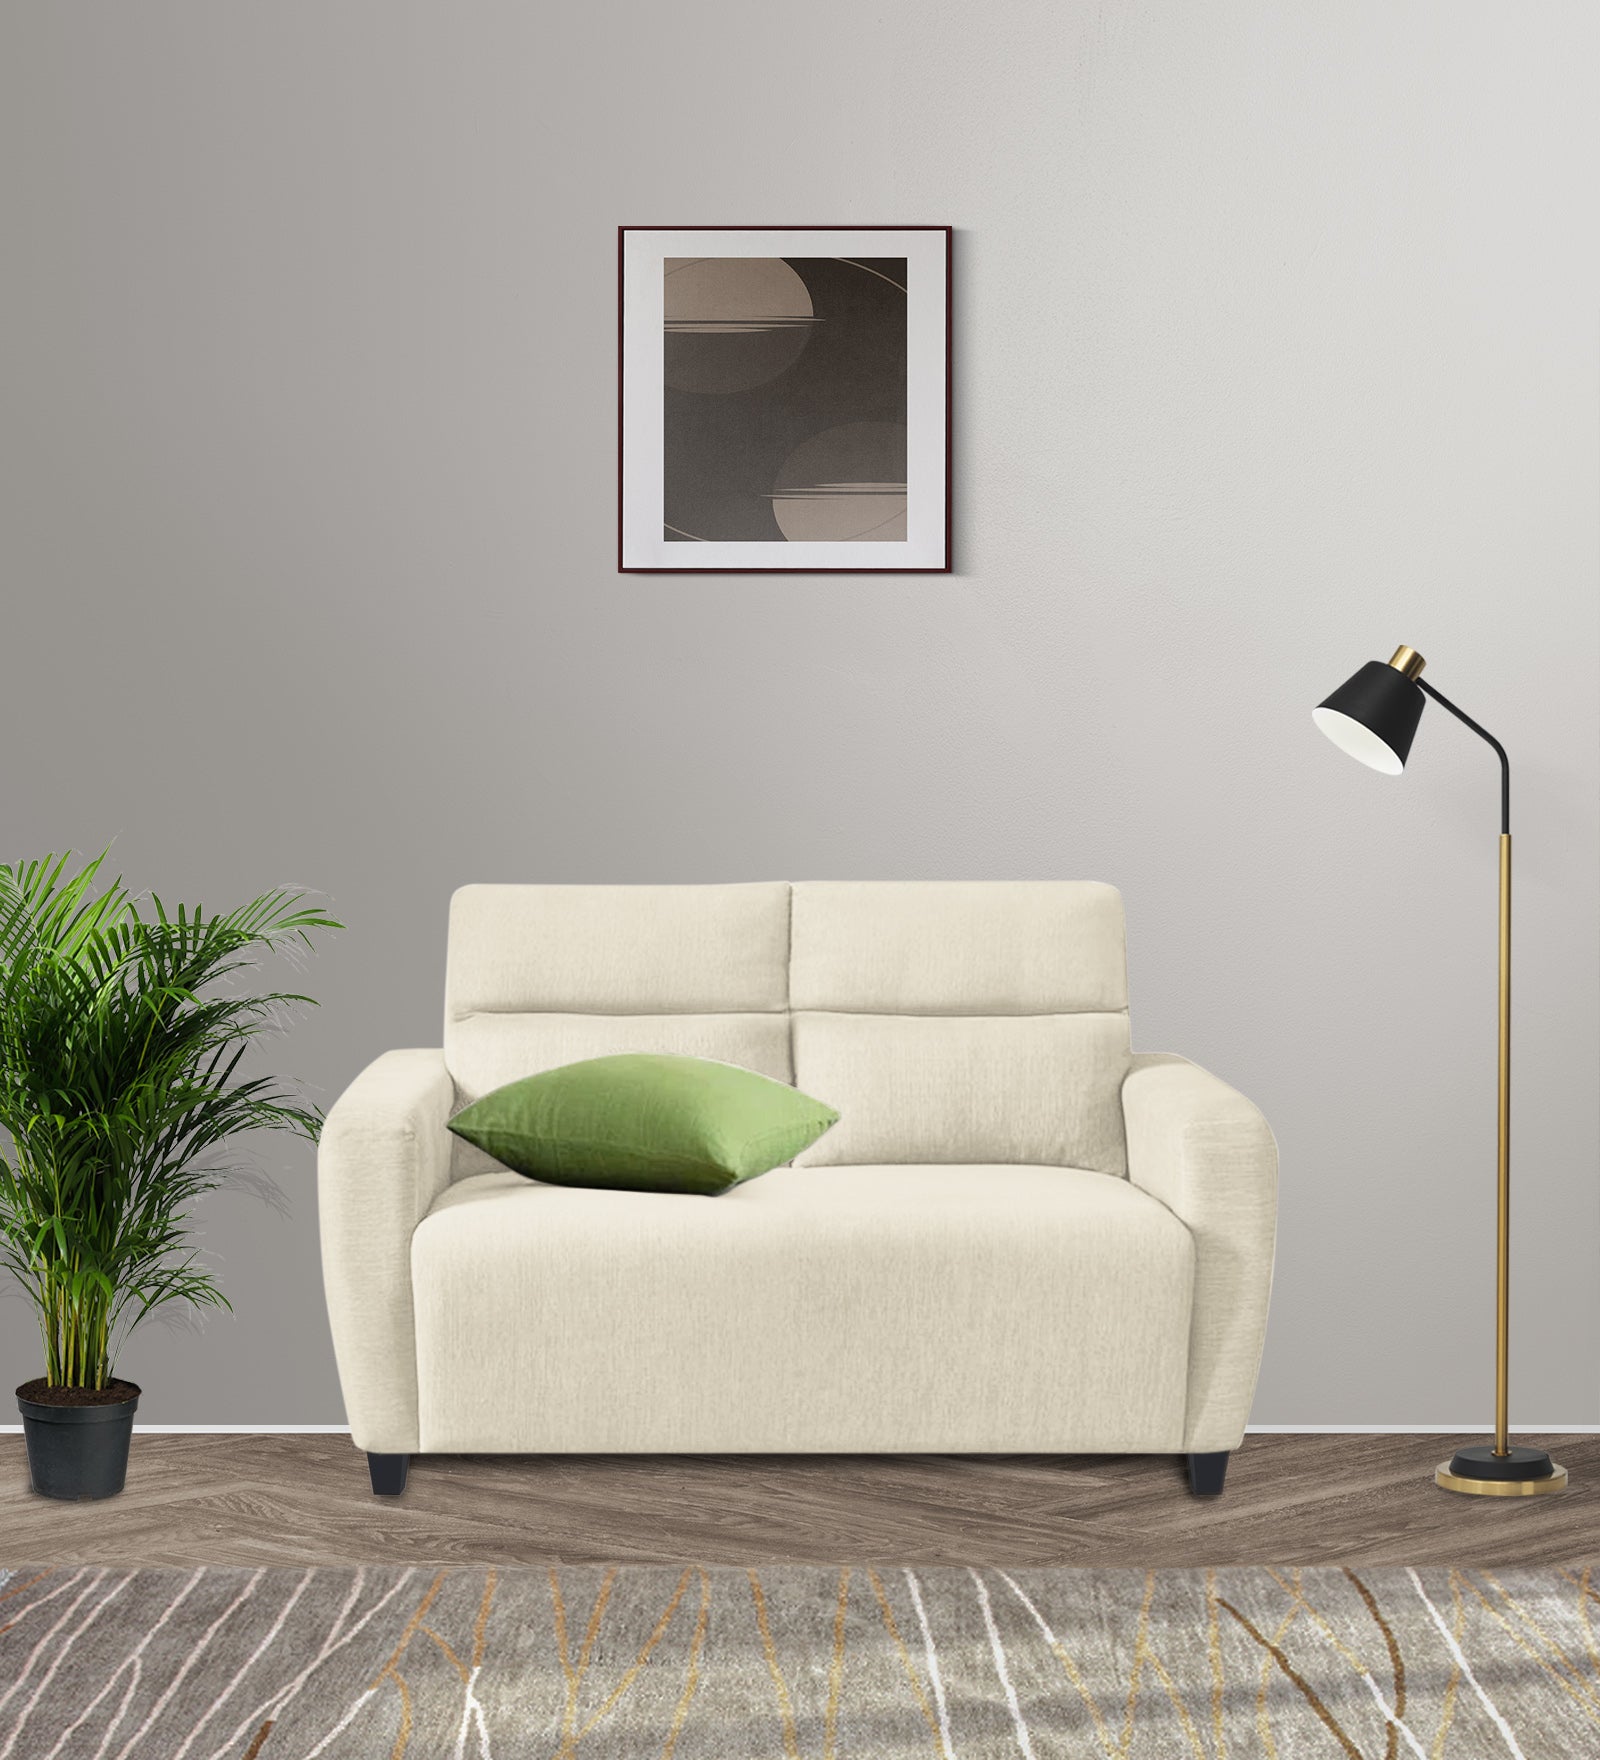 Bakadi Fabric 2 Seater Sofa in Ivory Cream Colour